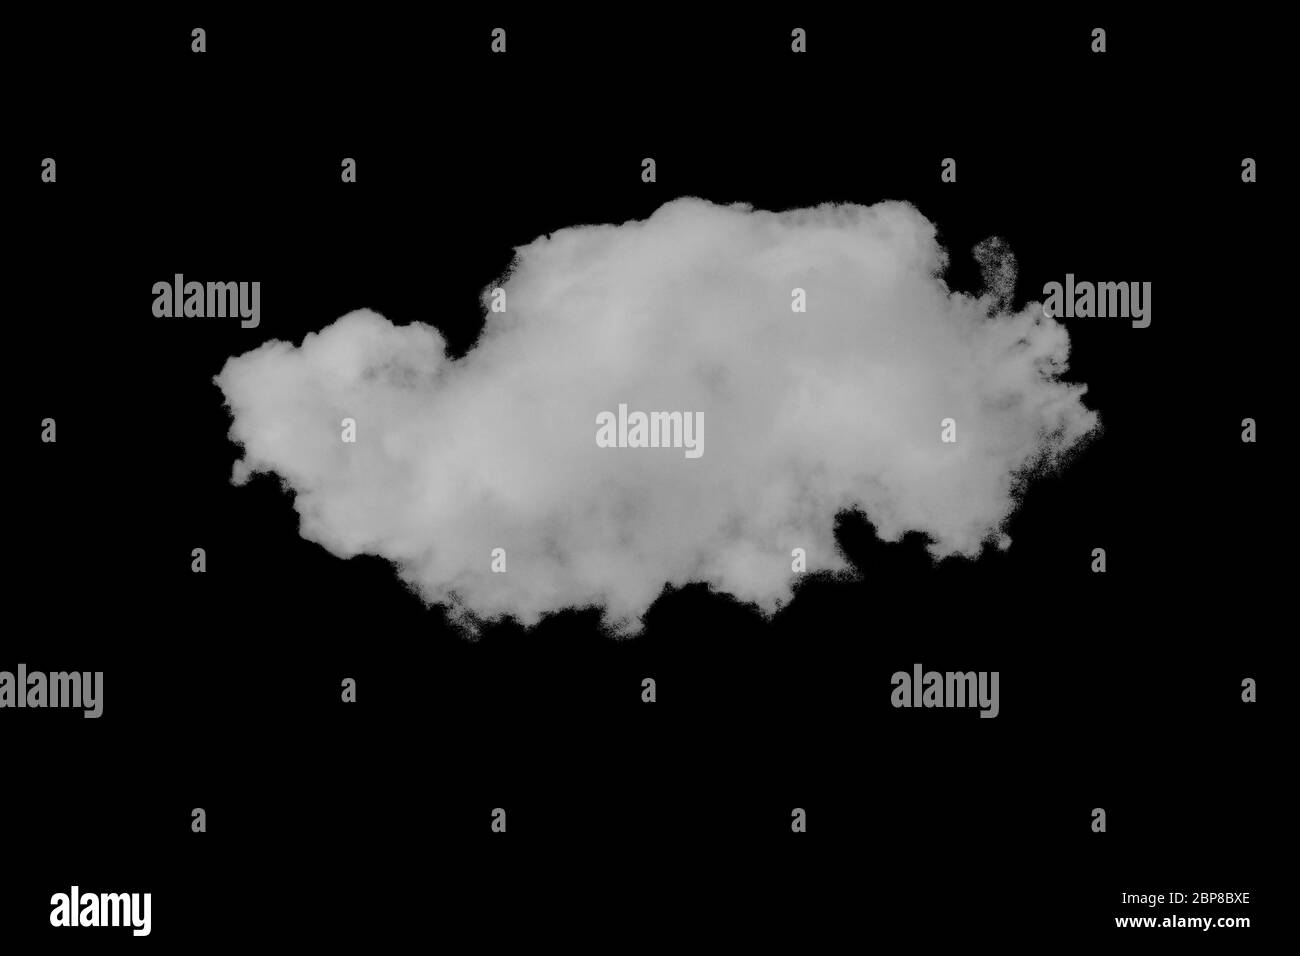 Single white cloud on black background. Stock Photo